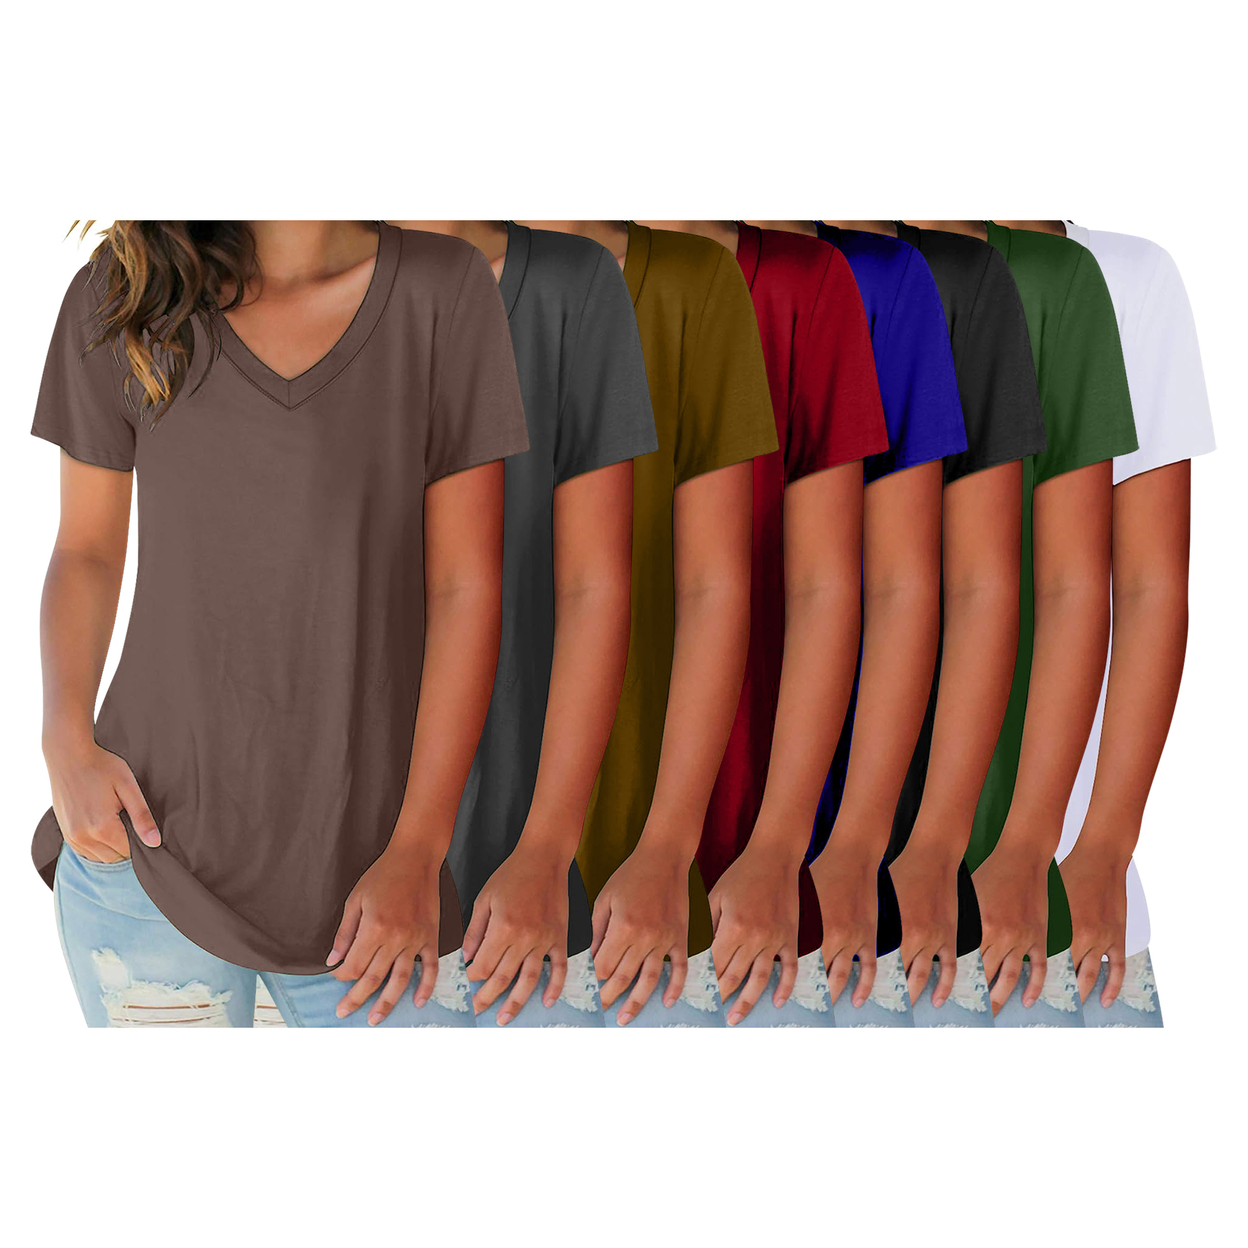 2-Pack: Women's Ultra Soft Smooth Cotton Blend Basic V-Neck Short Sleeve Shirts - Grey & Red, Large